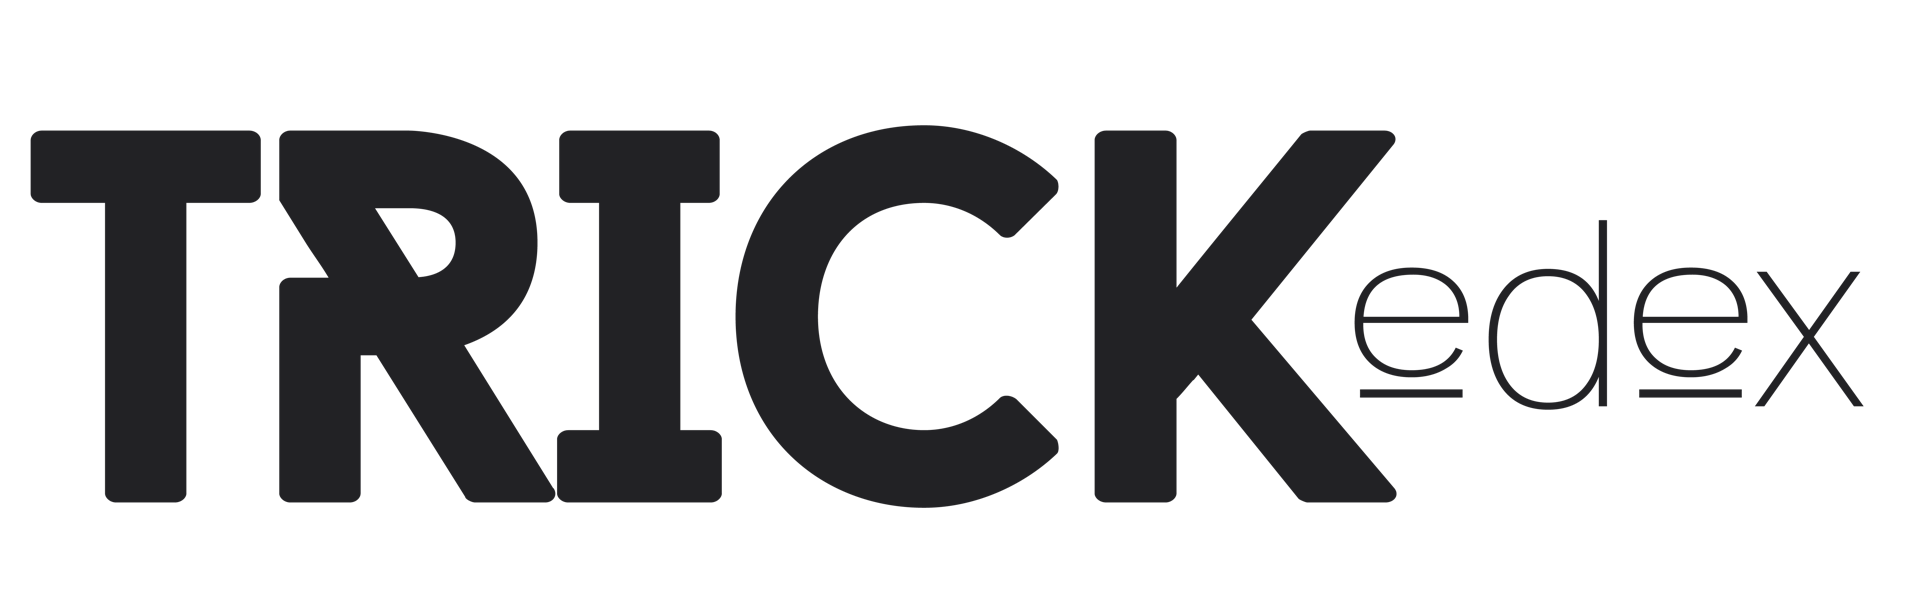 trickedex logo